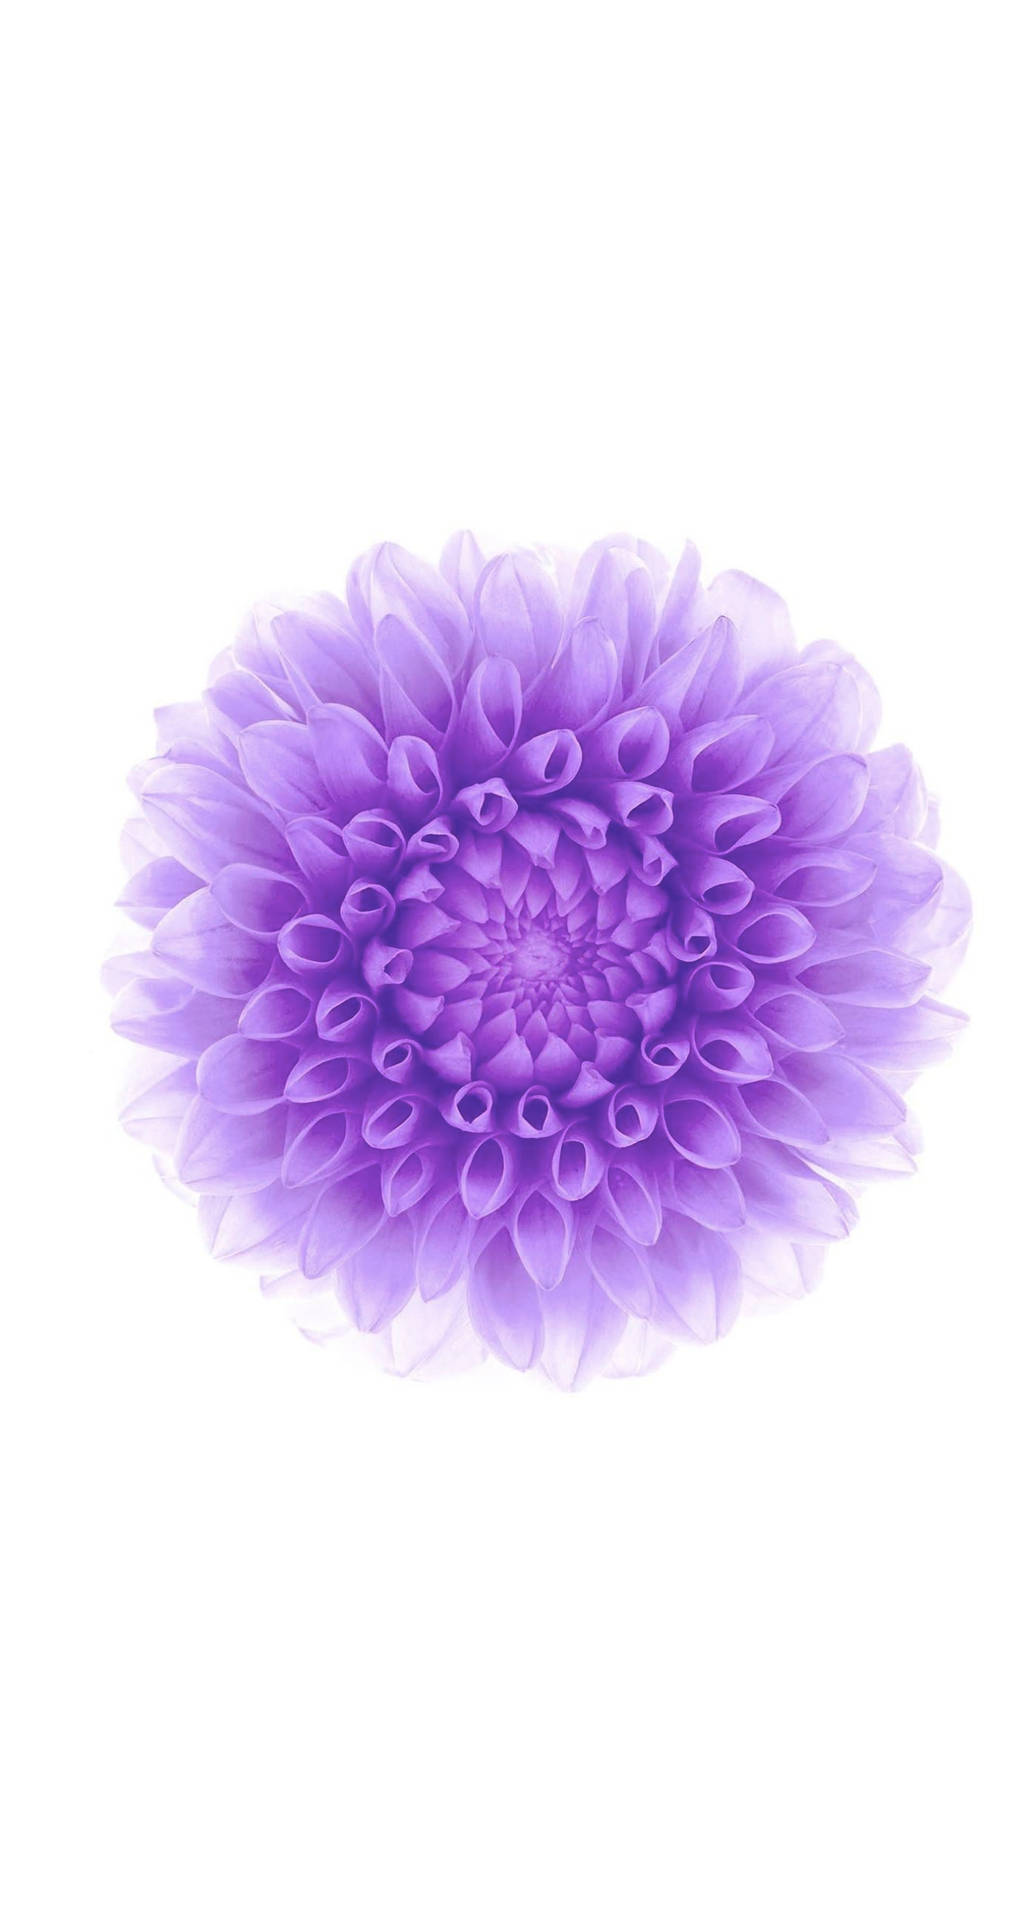 Flower Purple Iphone Background